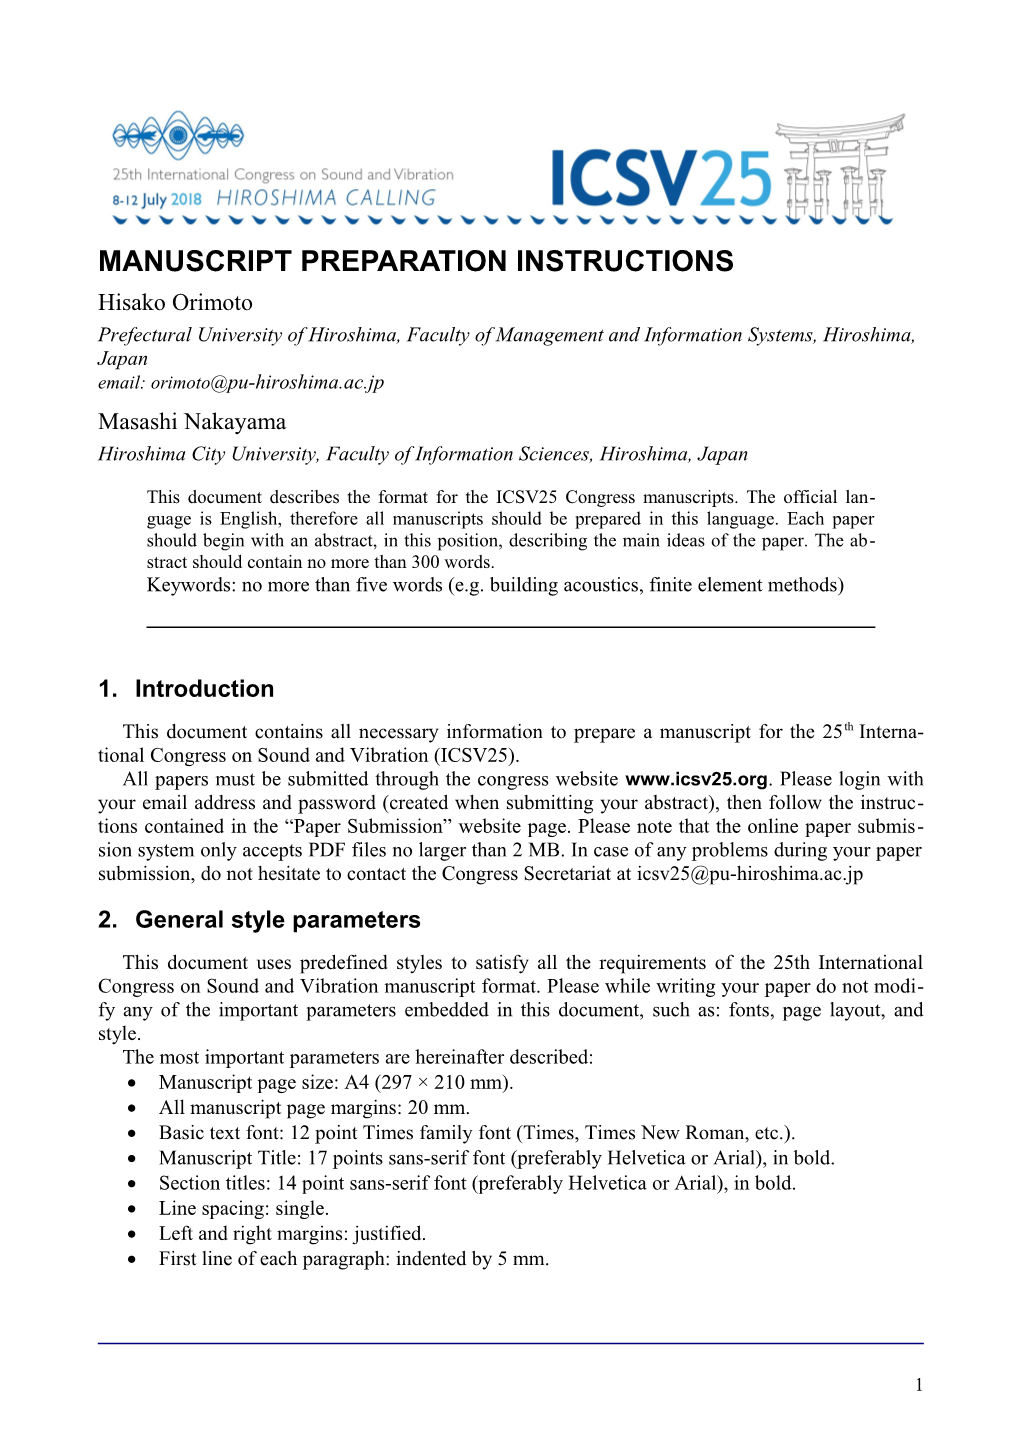 Manuscript Preparation Instructions